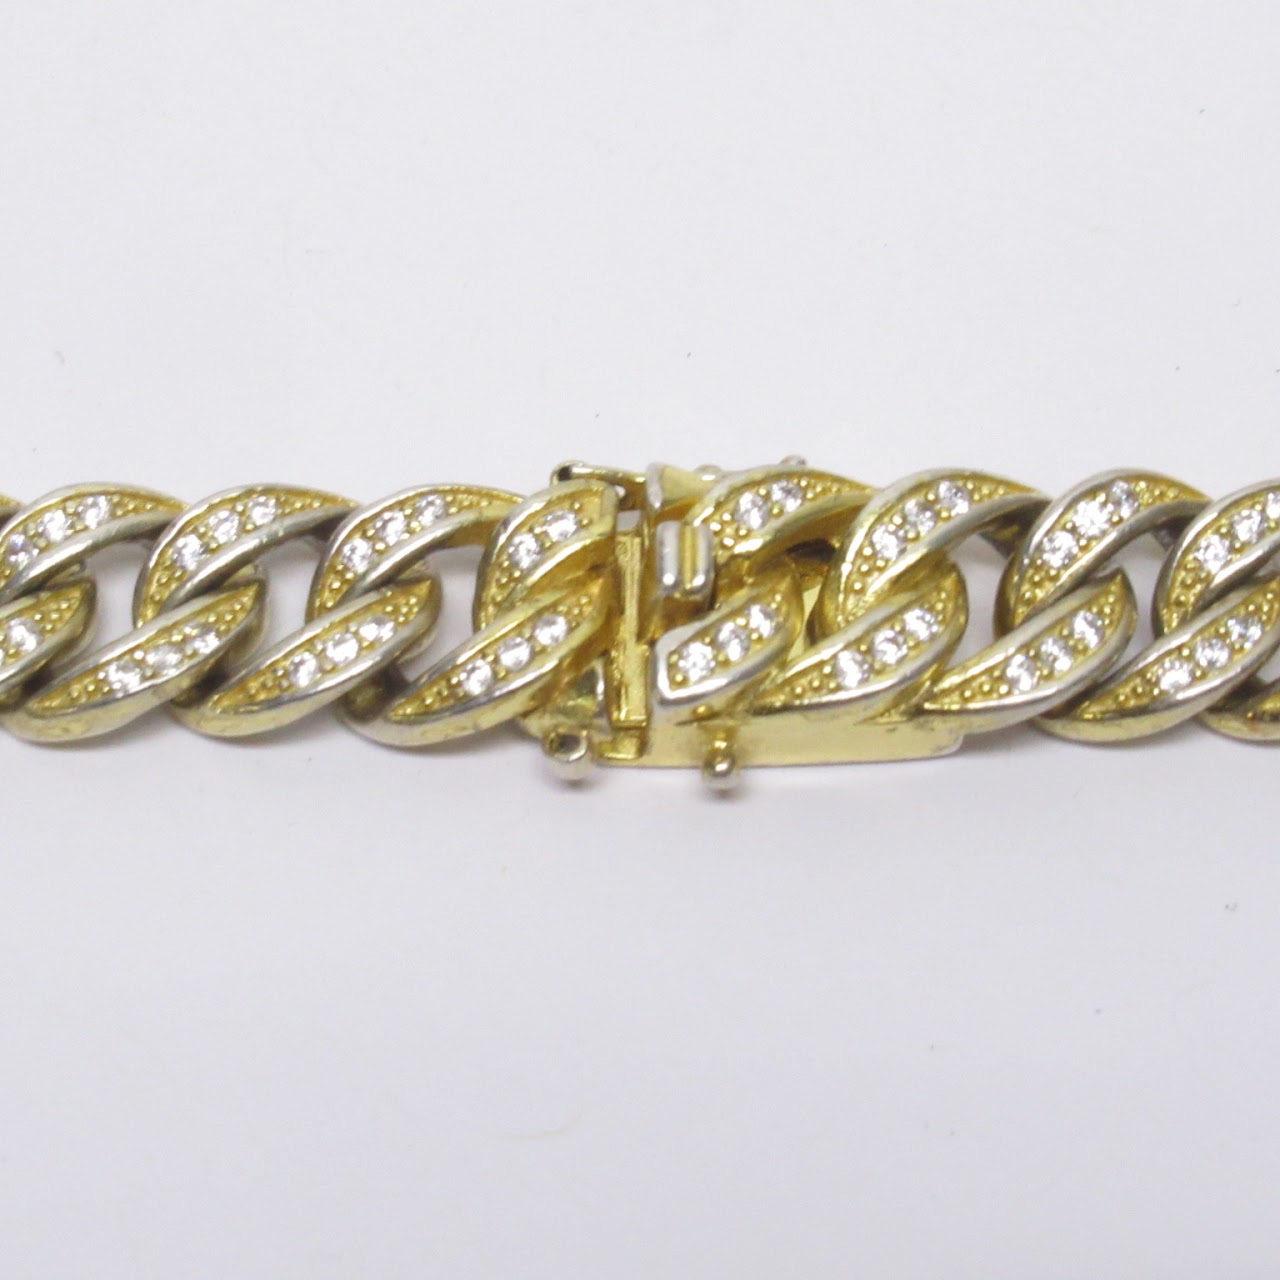 Vermeil & Crystal Curb Chain Necklace